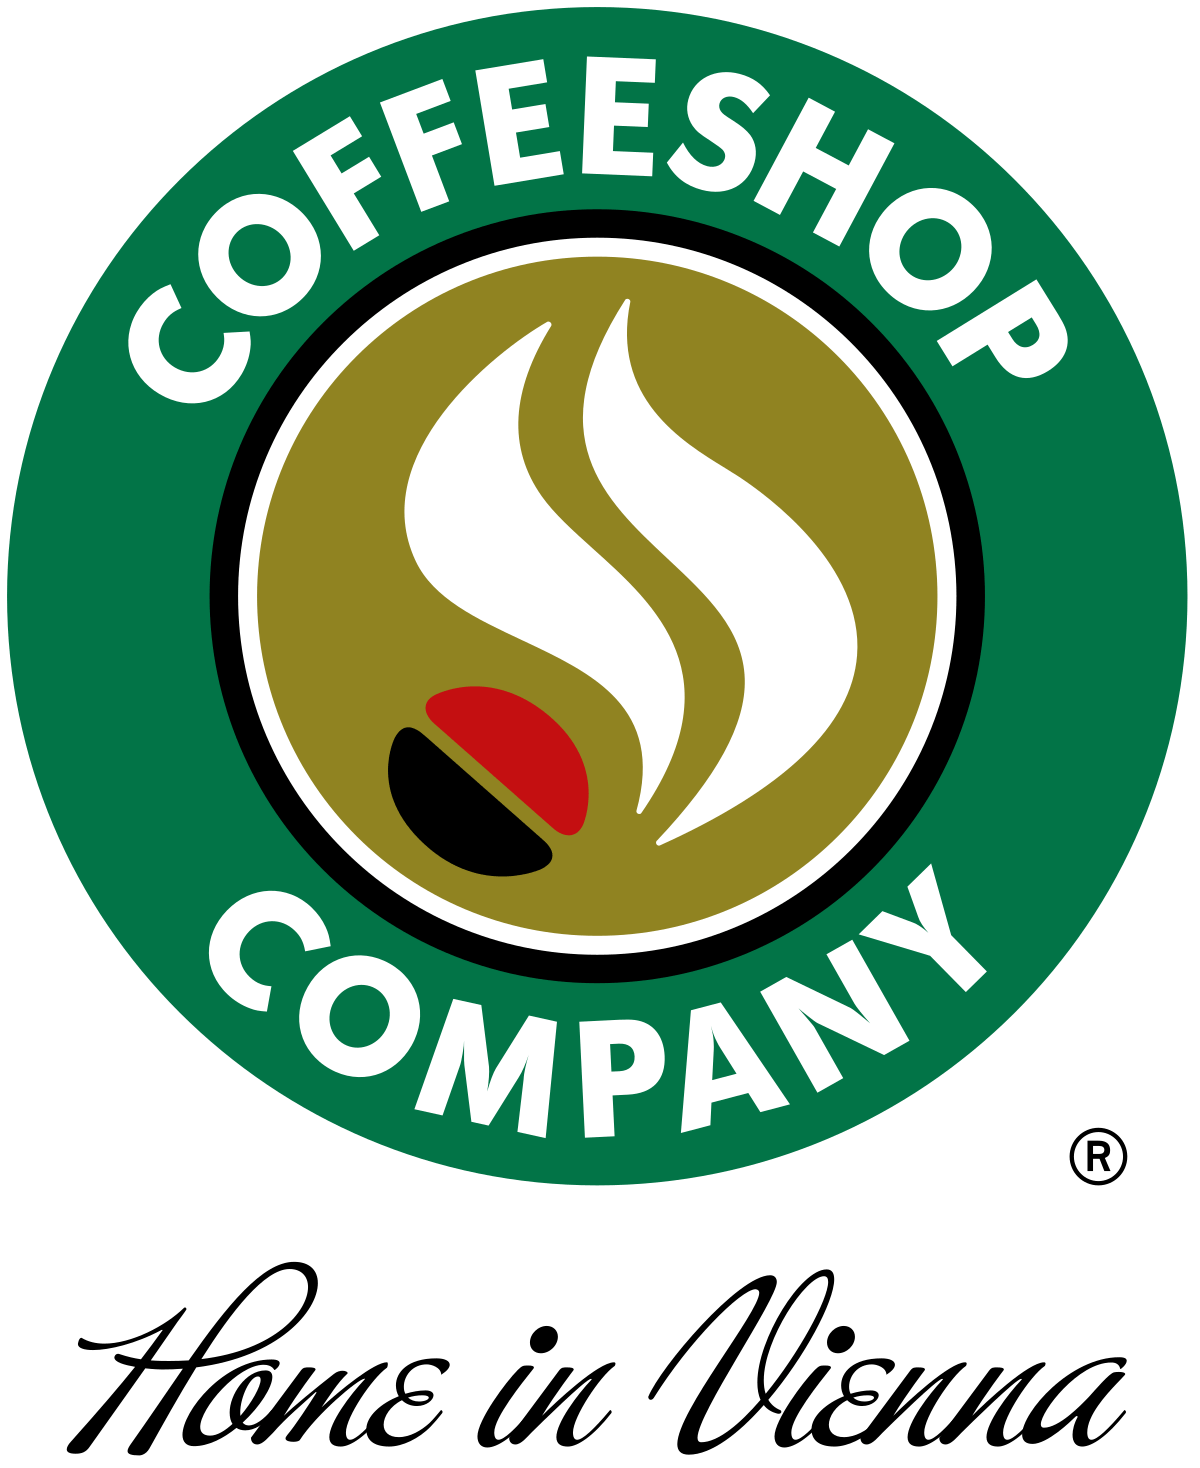 Coffee Shop Brand Logo - Coffeeshop Company